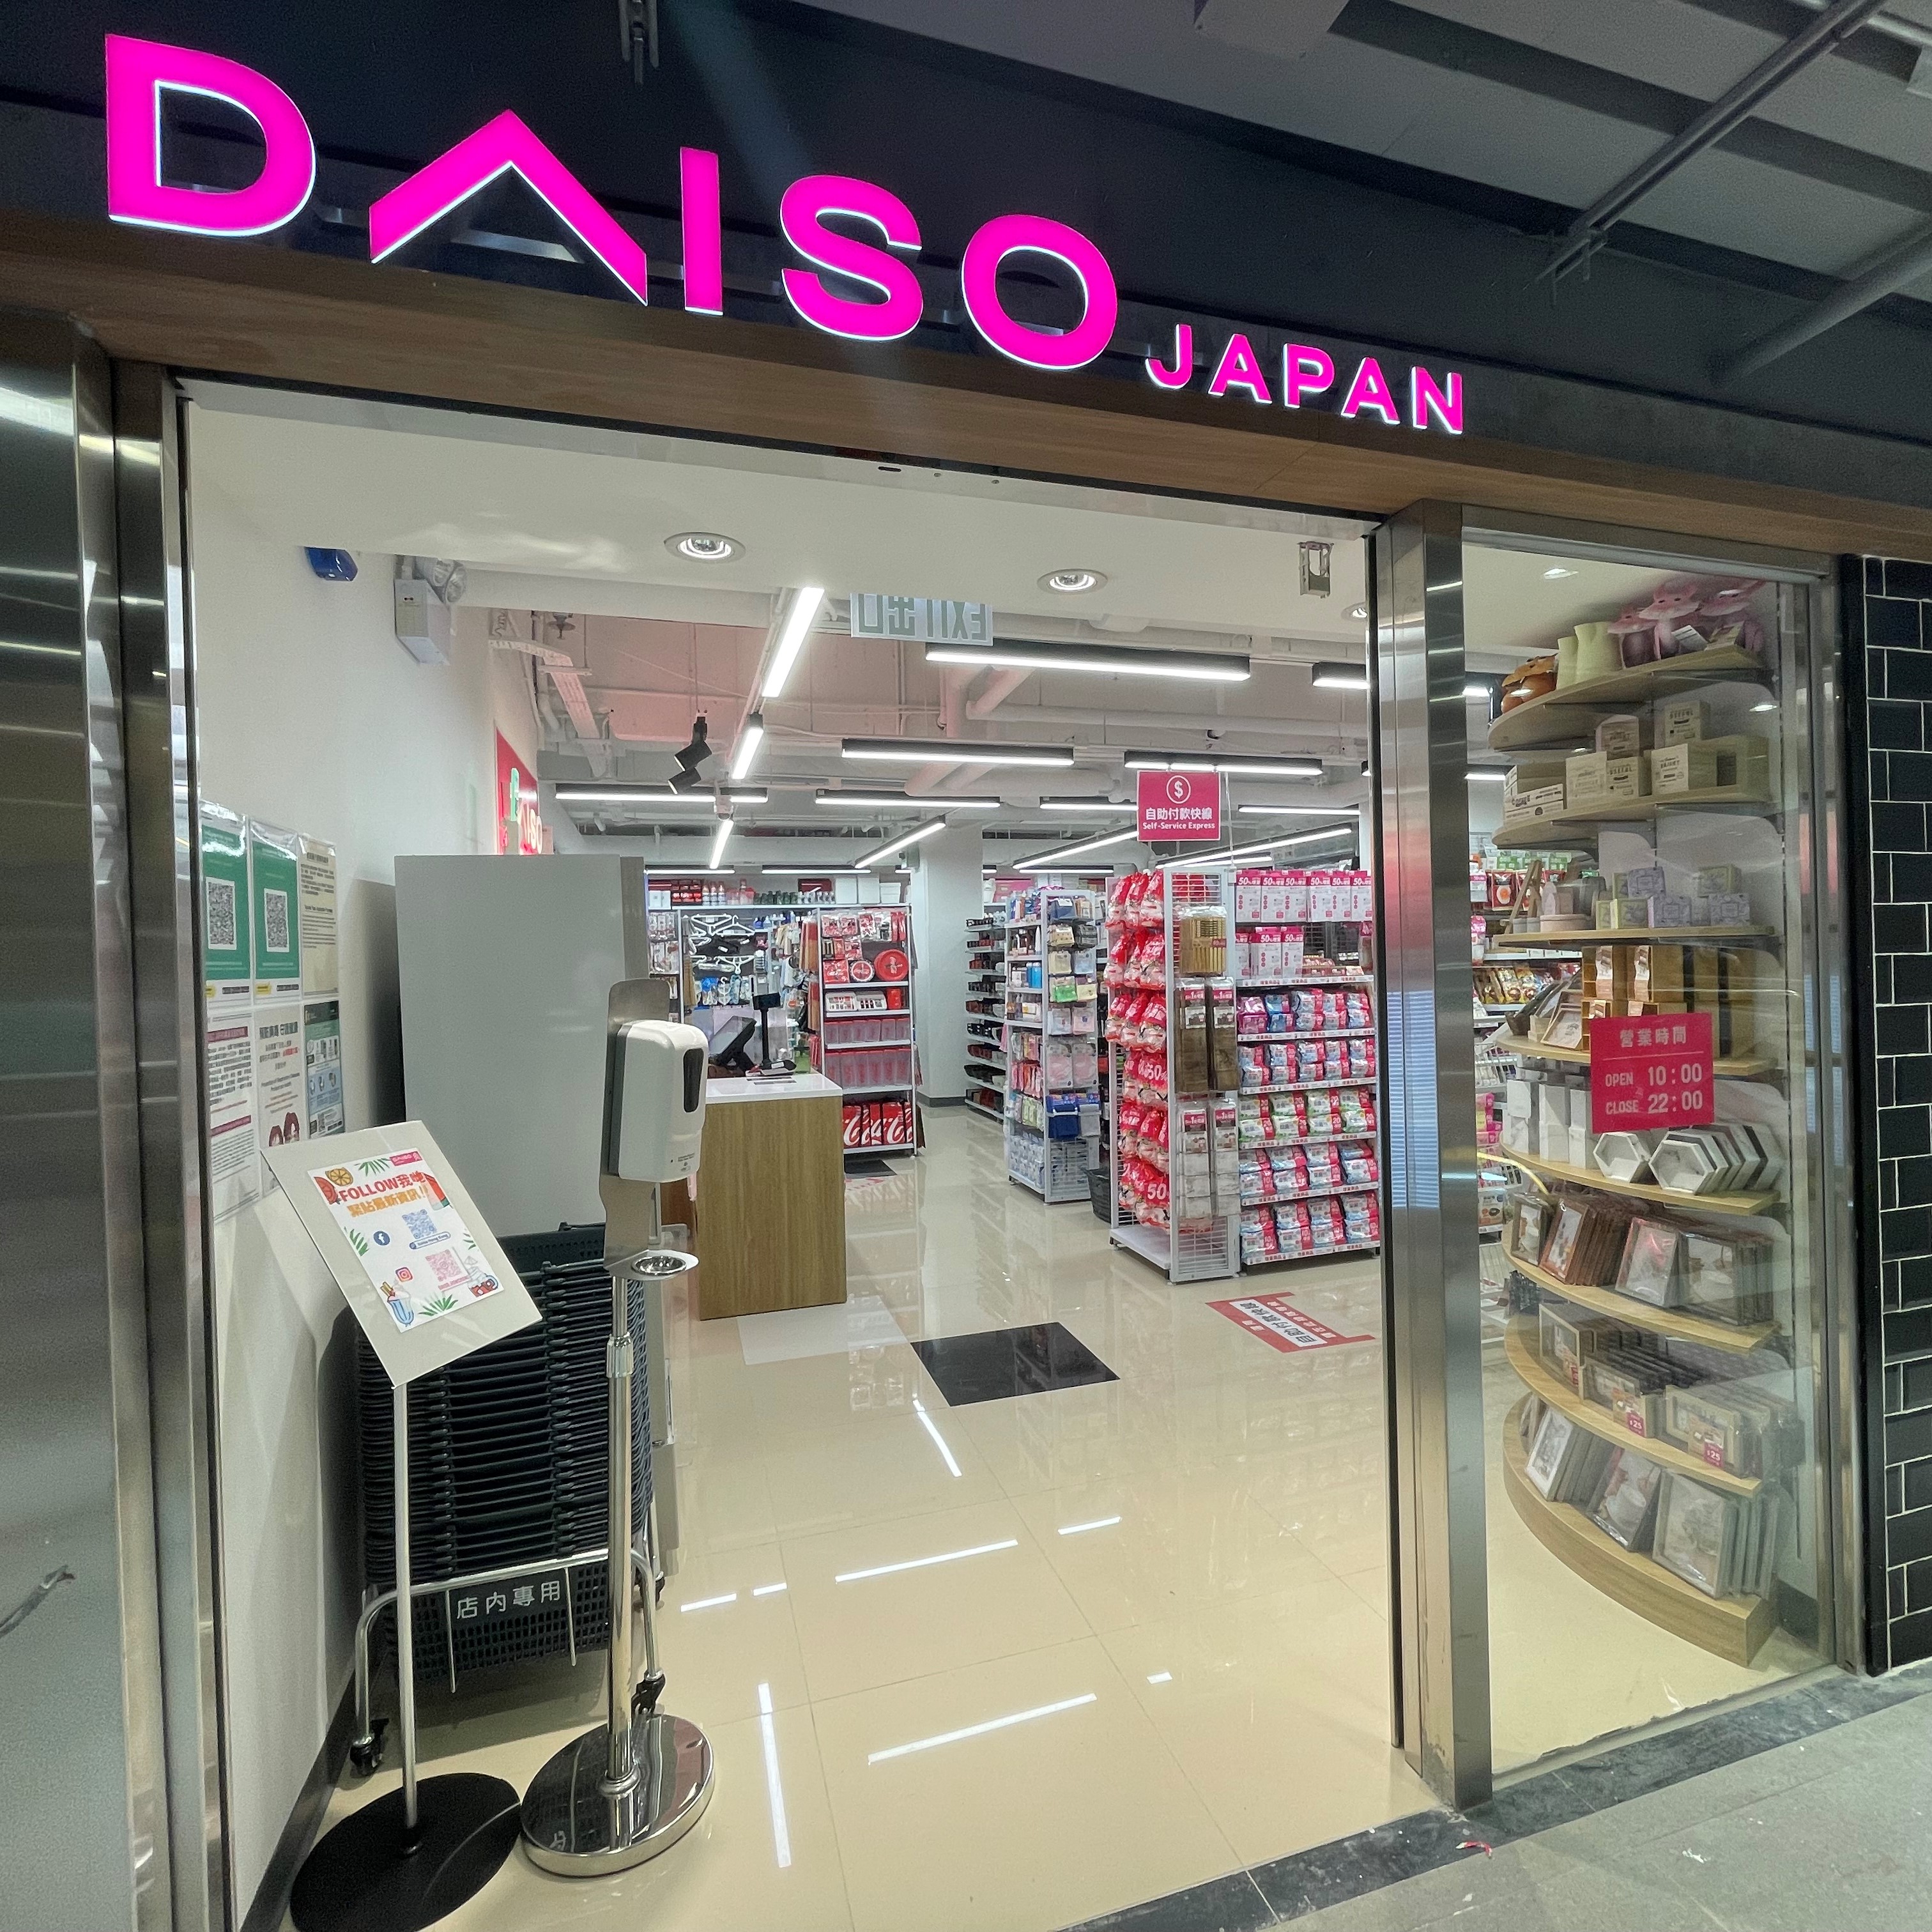 Daiso Japan Lei Tung Shop